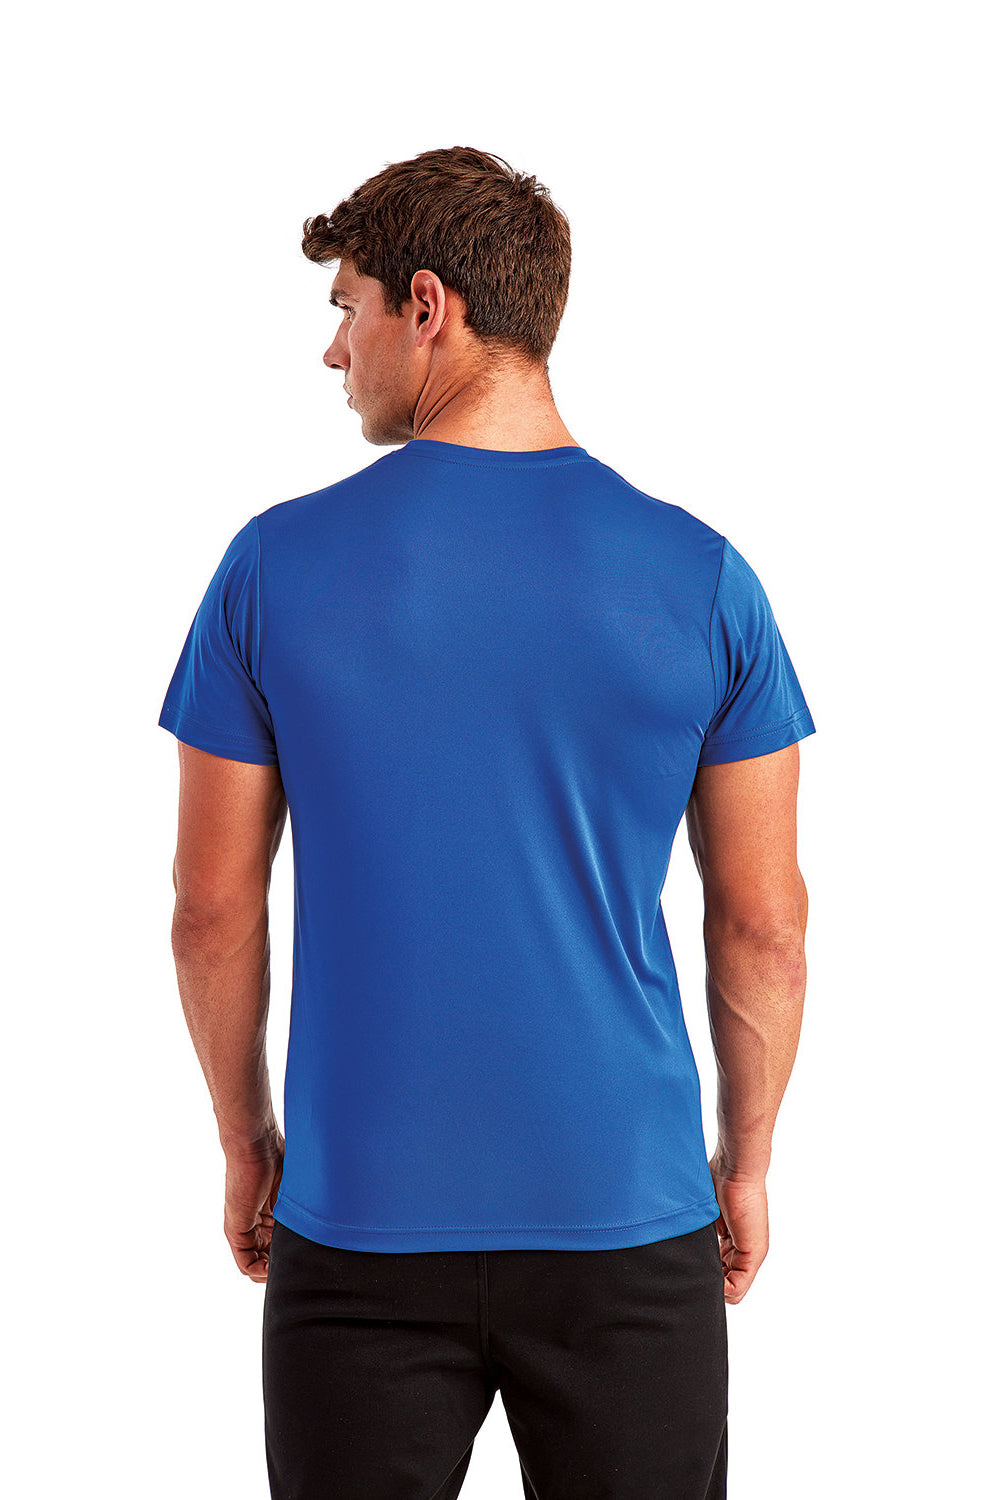 TriDri TD501 Mens Moisture Wicking Short Sleeve Crewneck T-Shirt Royal Blue Back